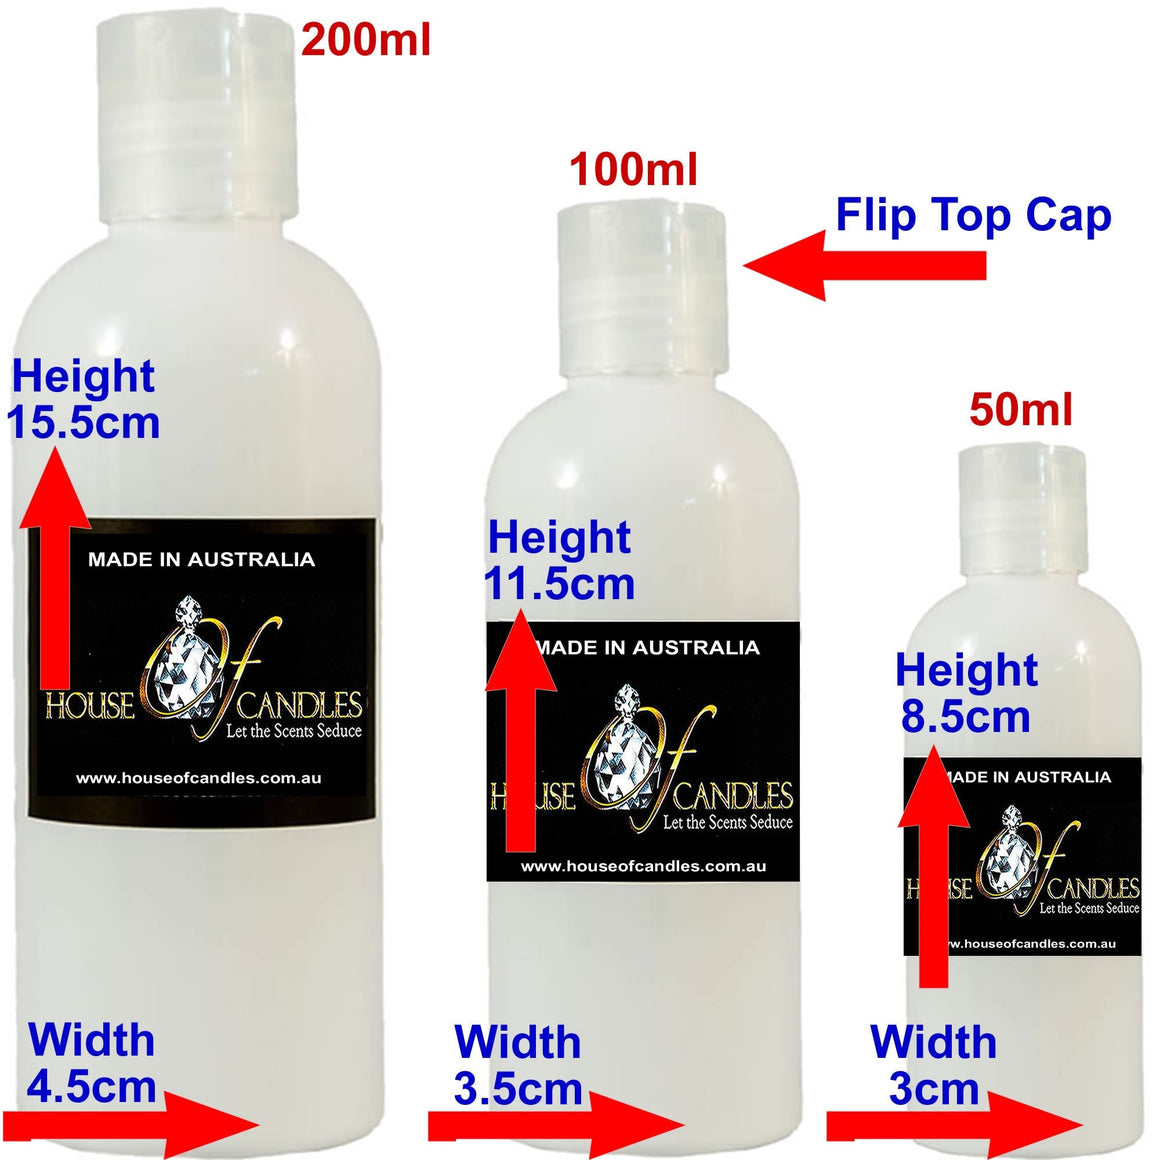 Pineapple Ice Cream Scented Body Wash Shower Gel Skin Cleanser Liquid Soap